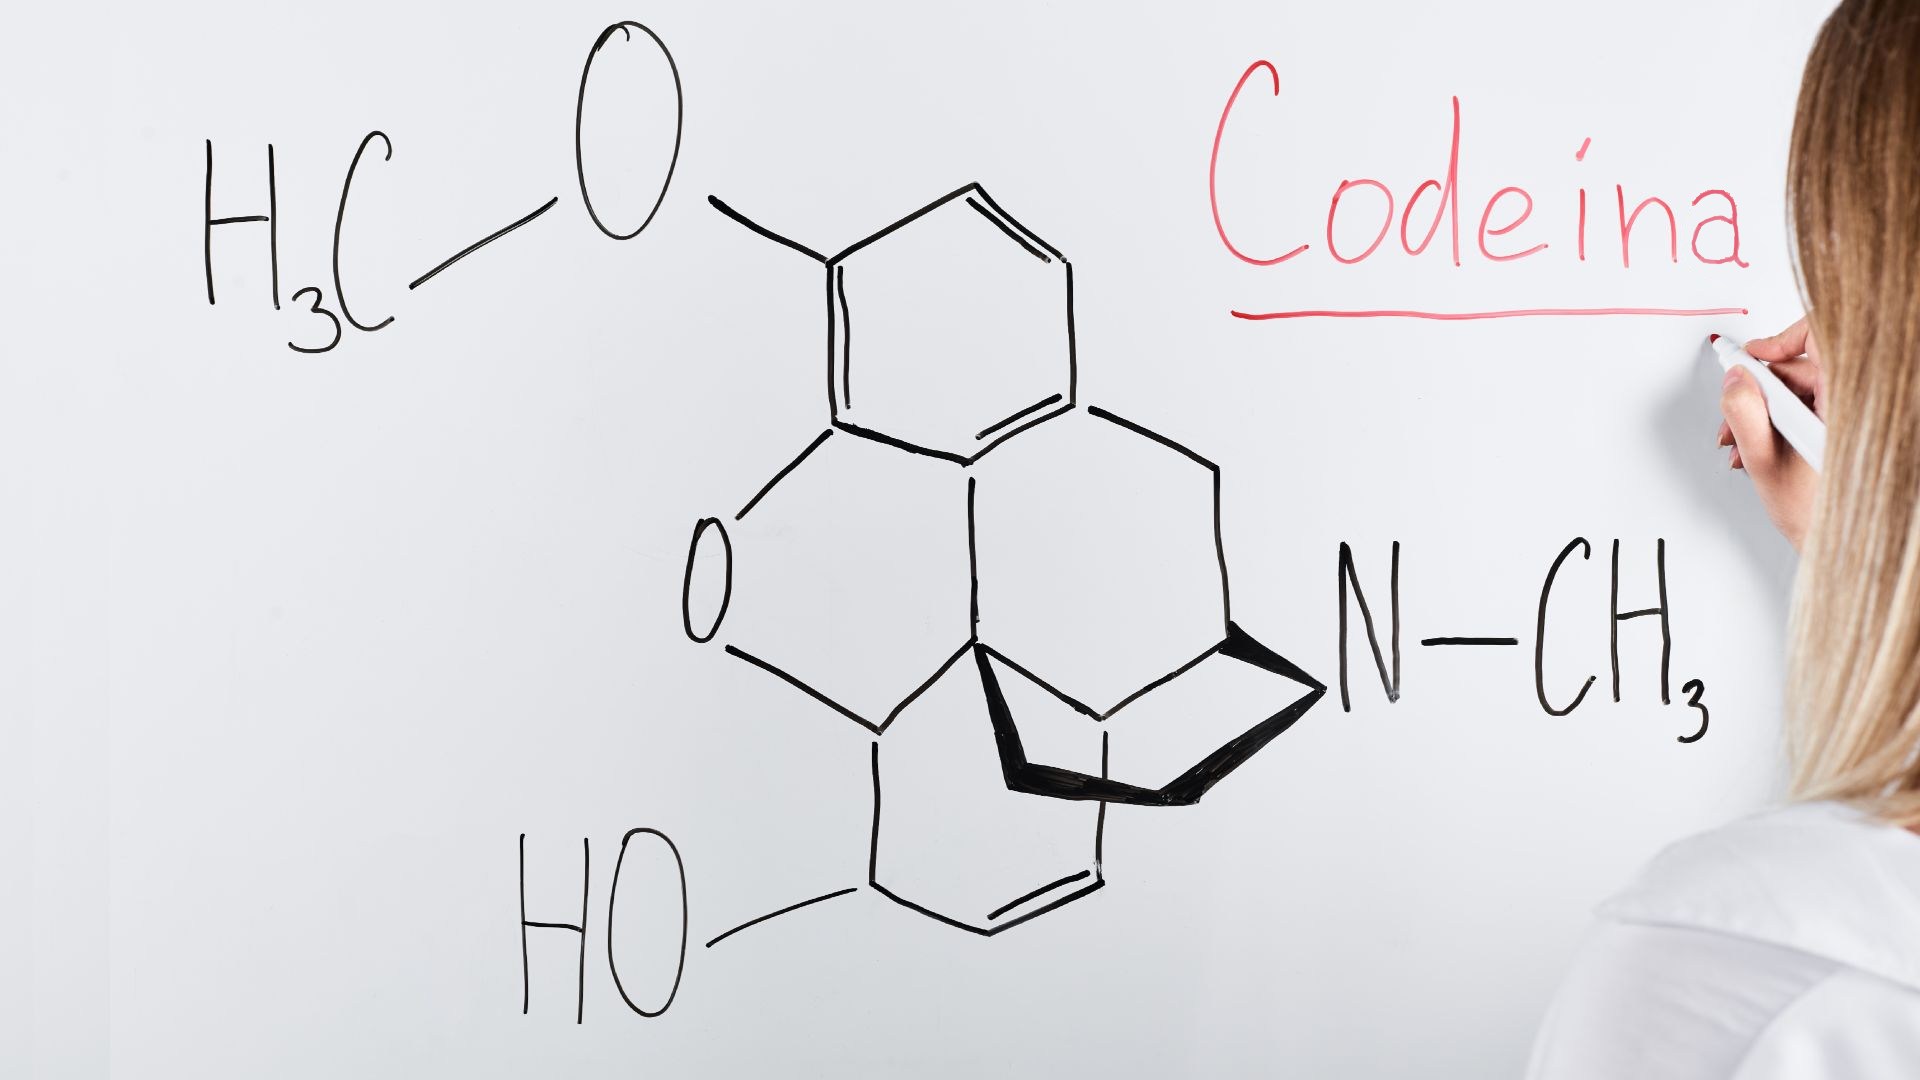 codeína - exame toxicológico